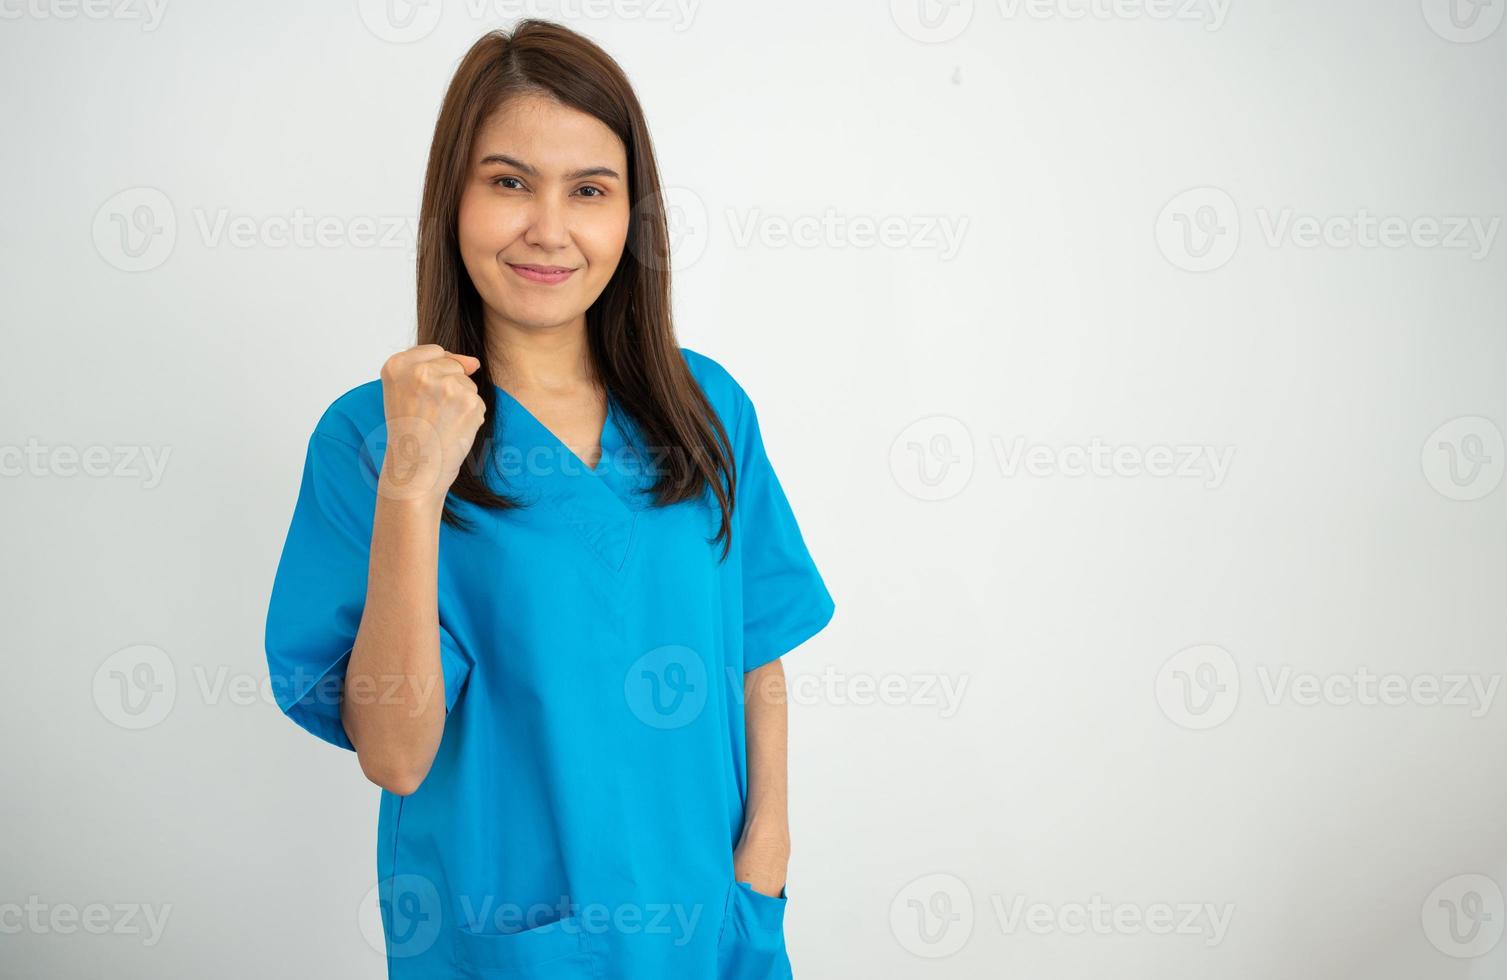 retrato de médica asiática confiante, feliz e sorridente, médica ou enfermeira vestindo uniforme de avental azul sobre fundo branco isolado foto